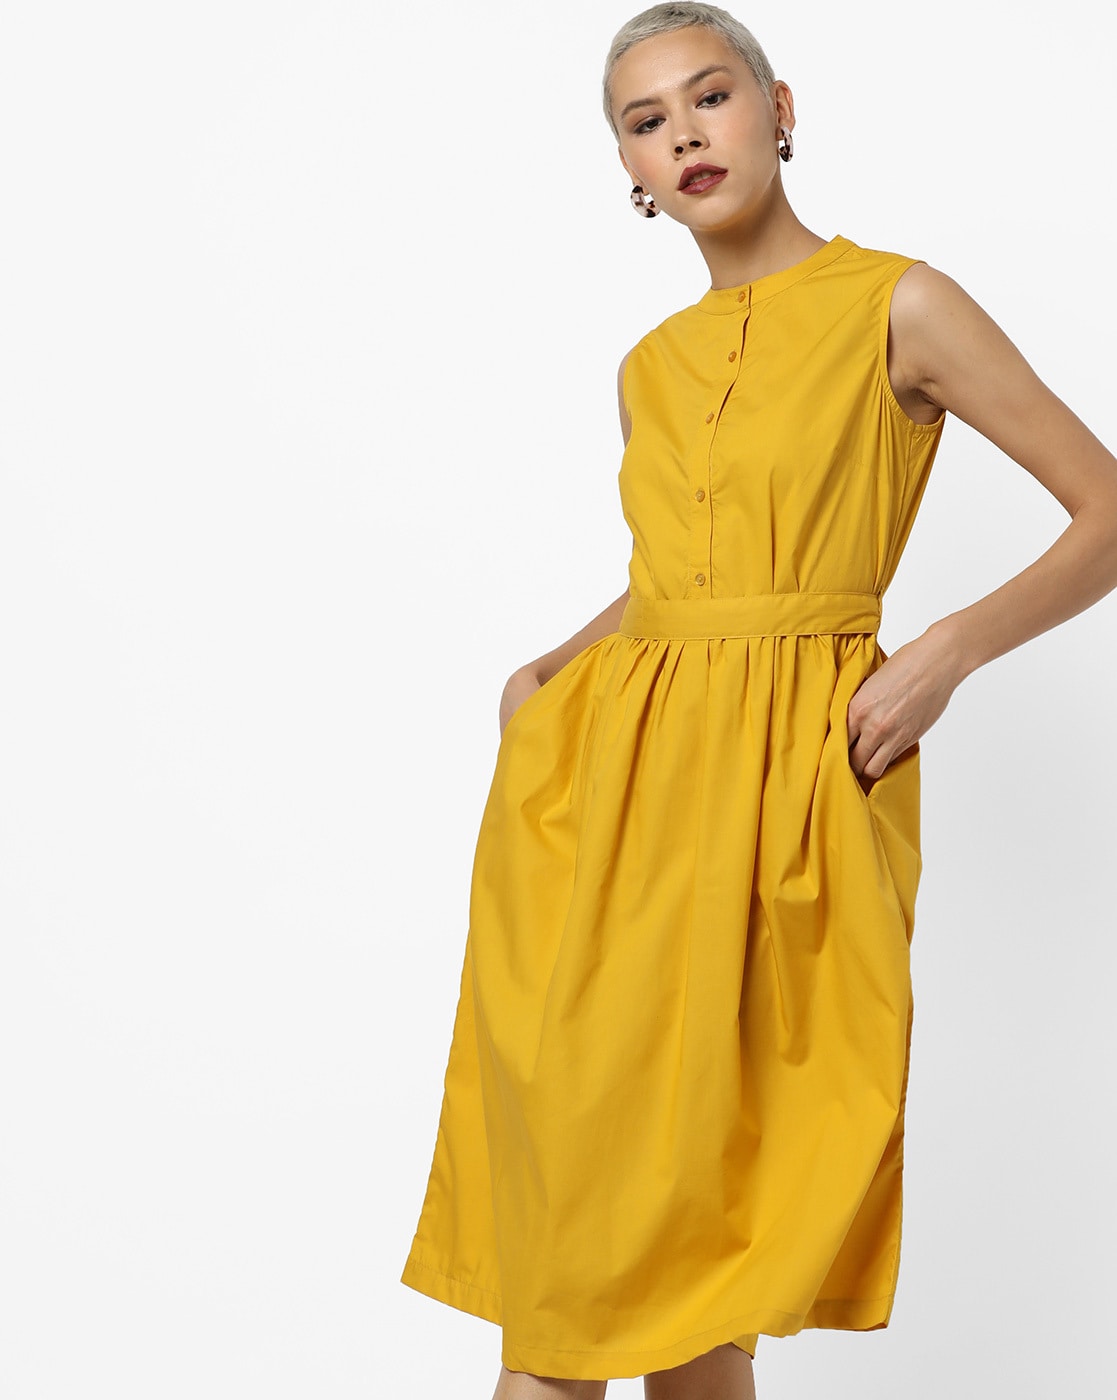 yellow dress online